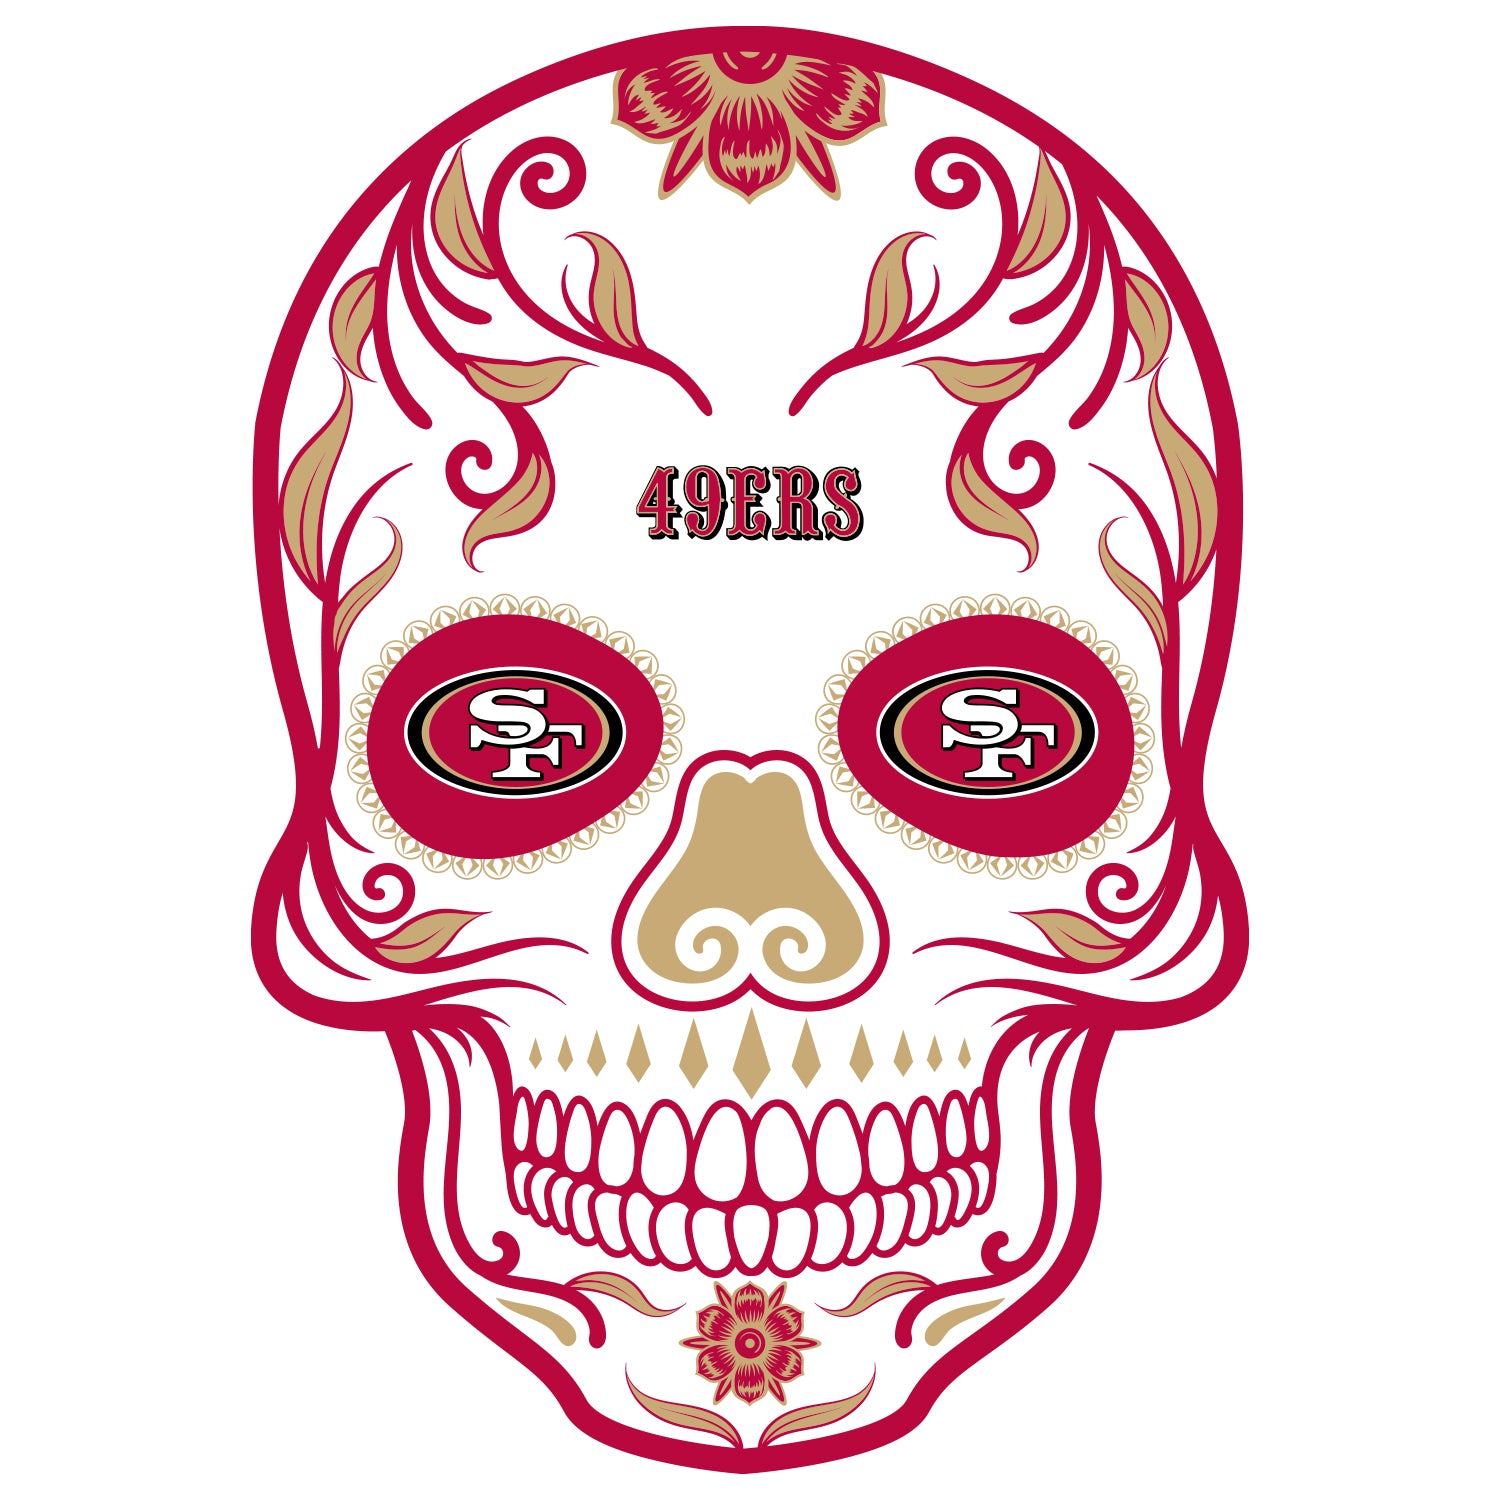 San Francisco 49'ers 49ers Sugar Skull NFL and 19 similar items